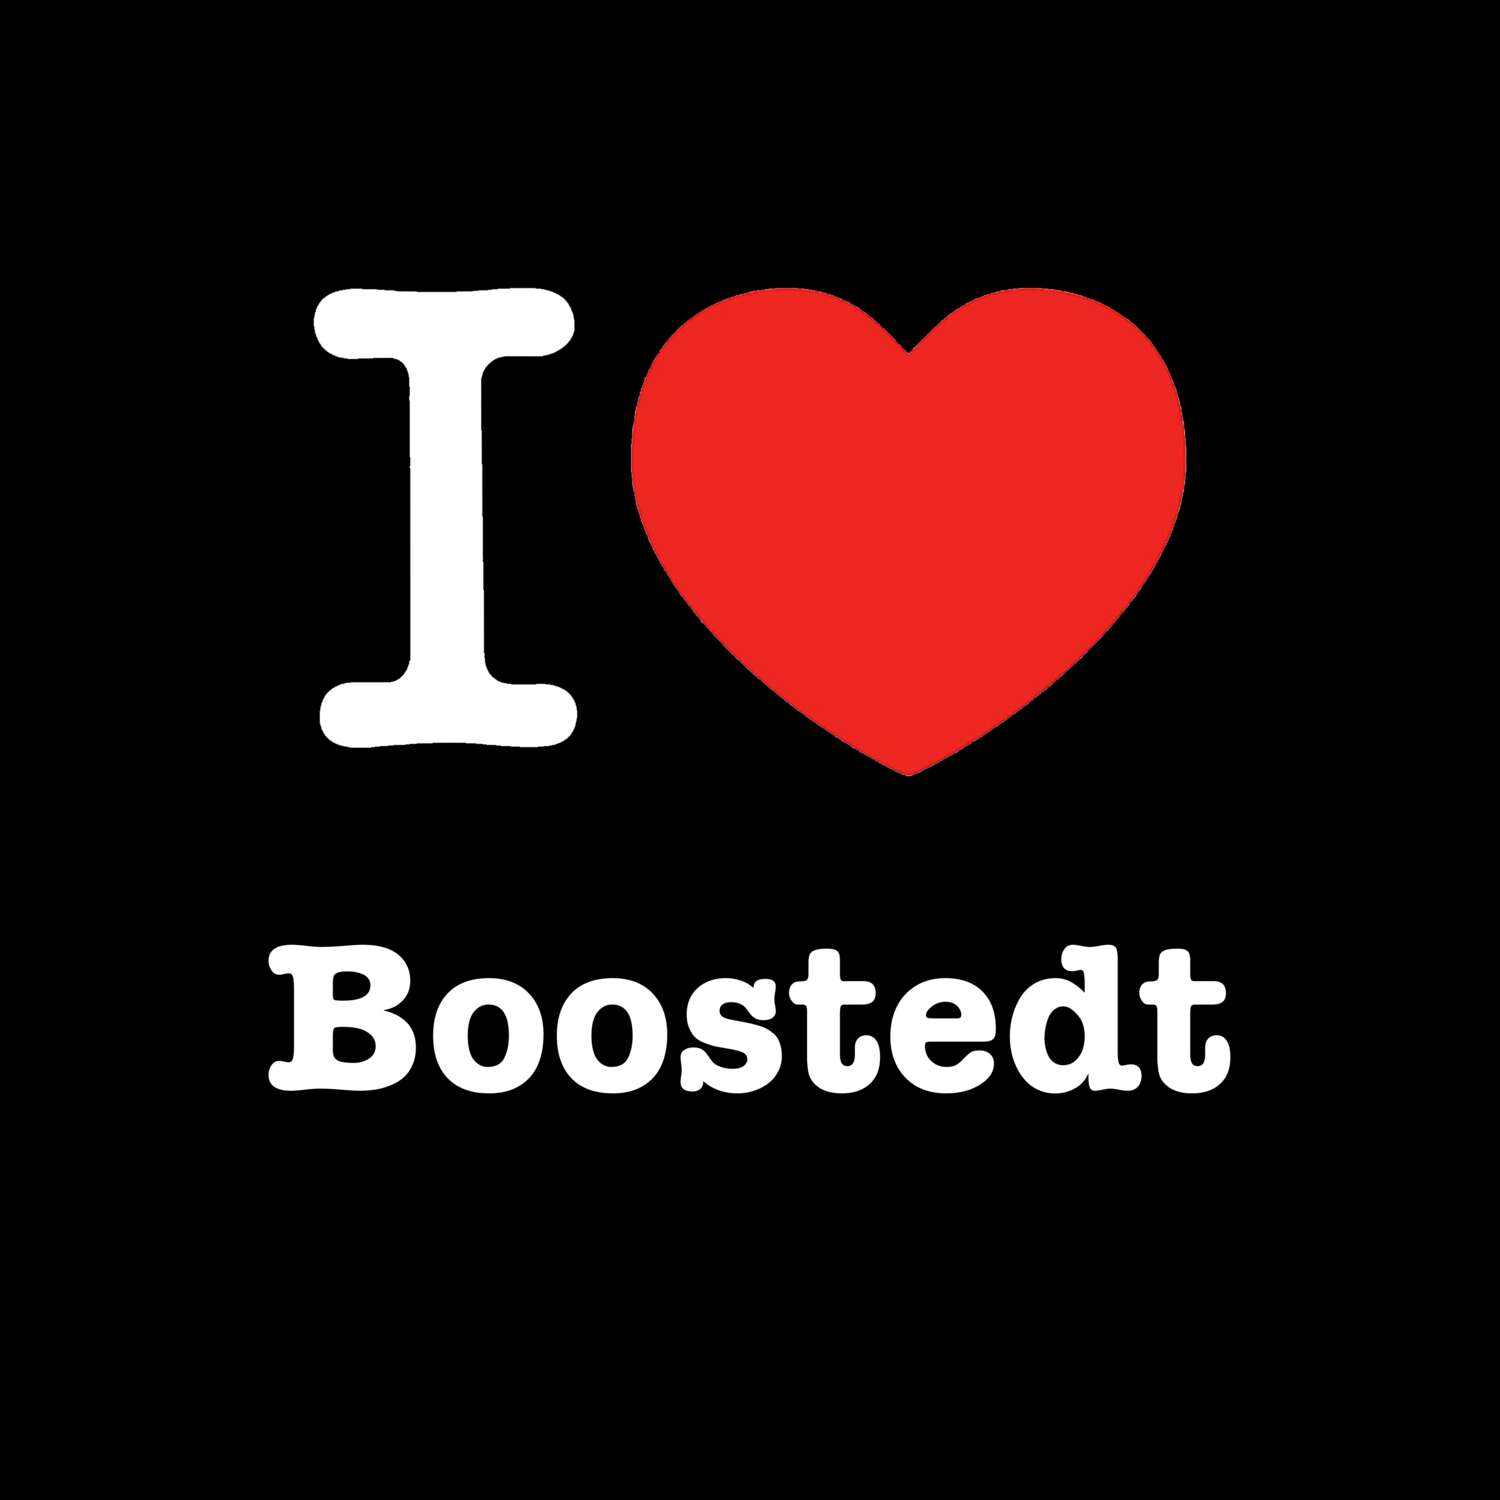 Boostedt T-Shirt »I love«